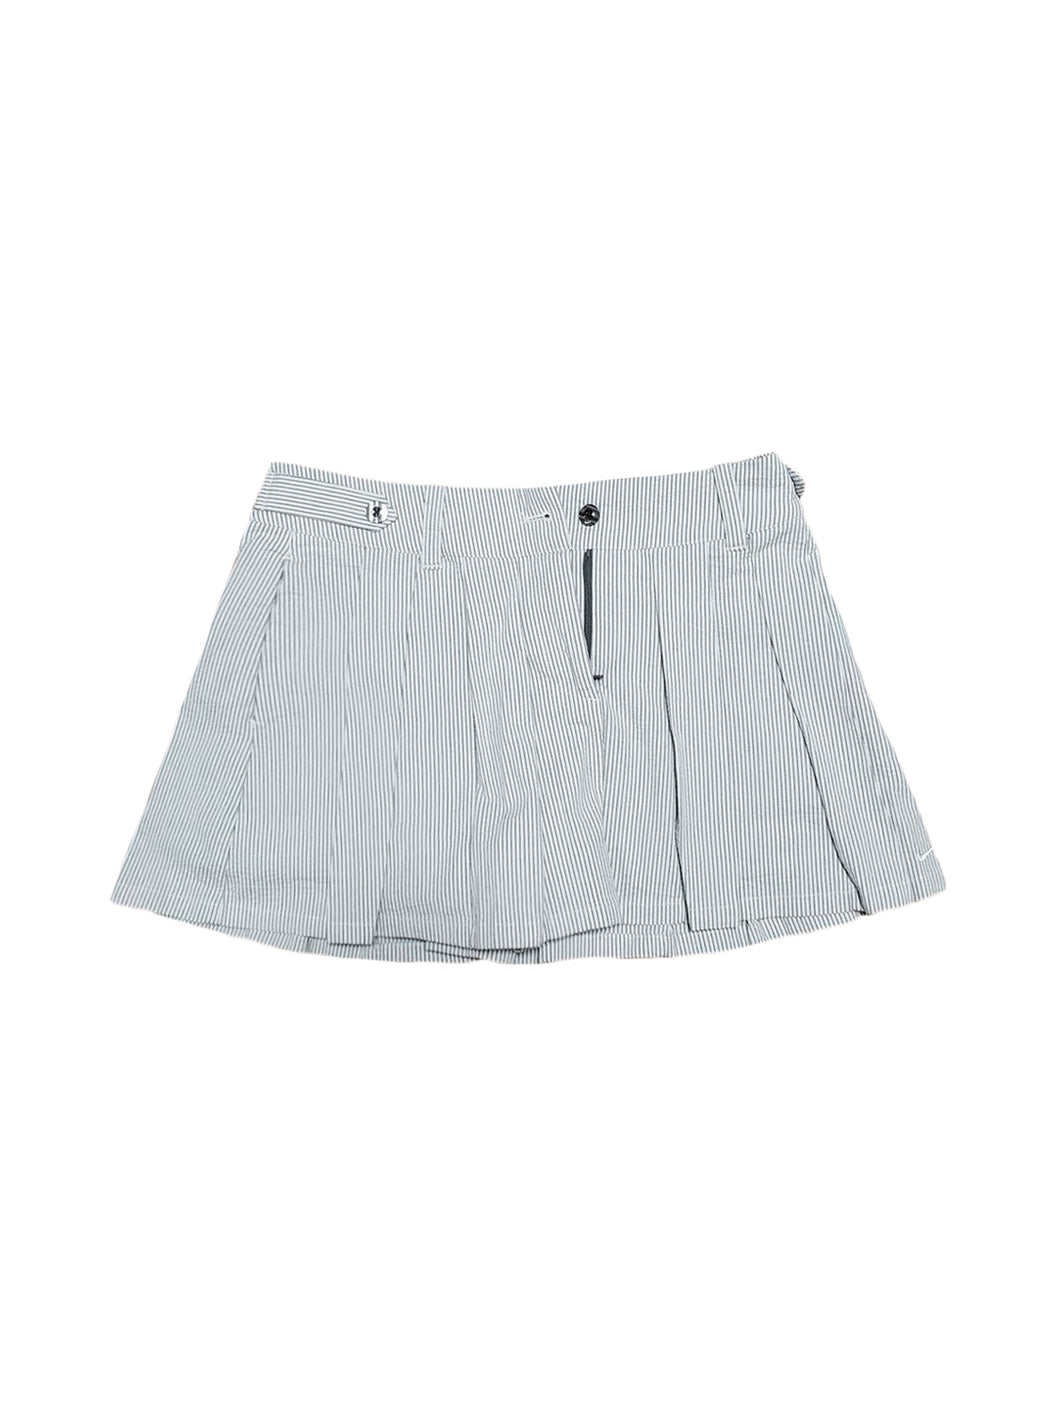 Nike Gray Pinstripe Pleated Skirt